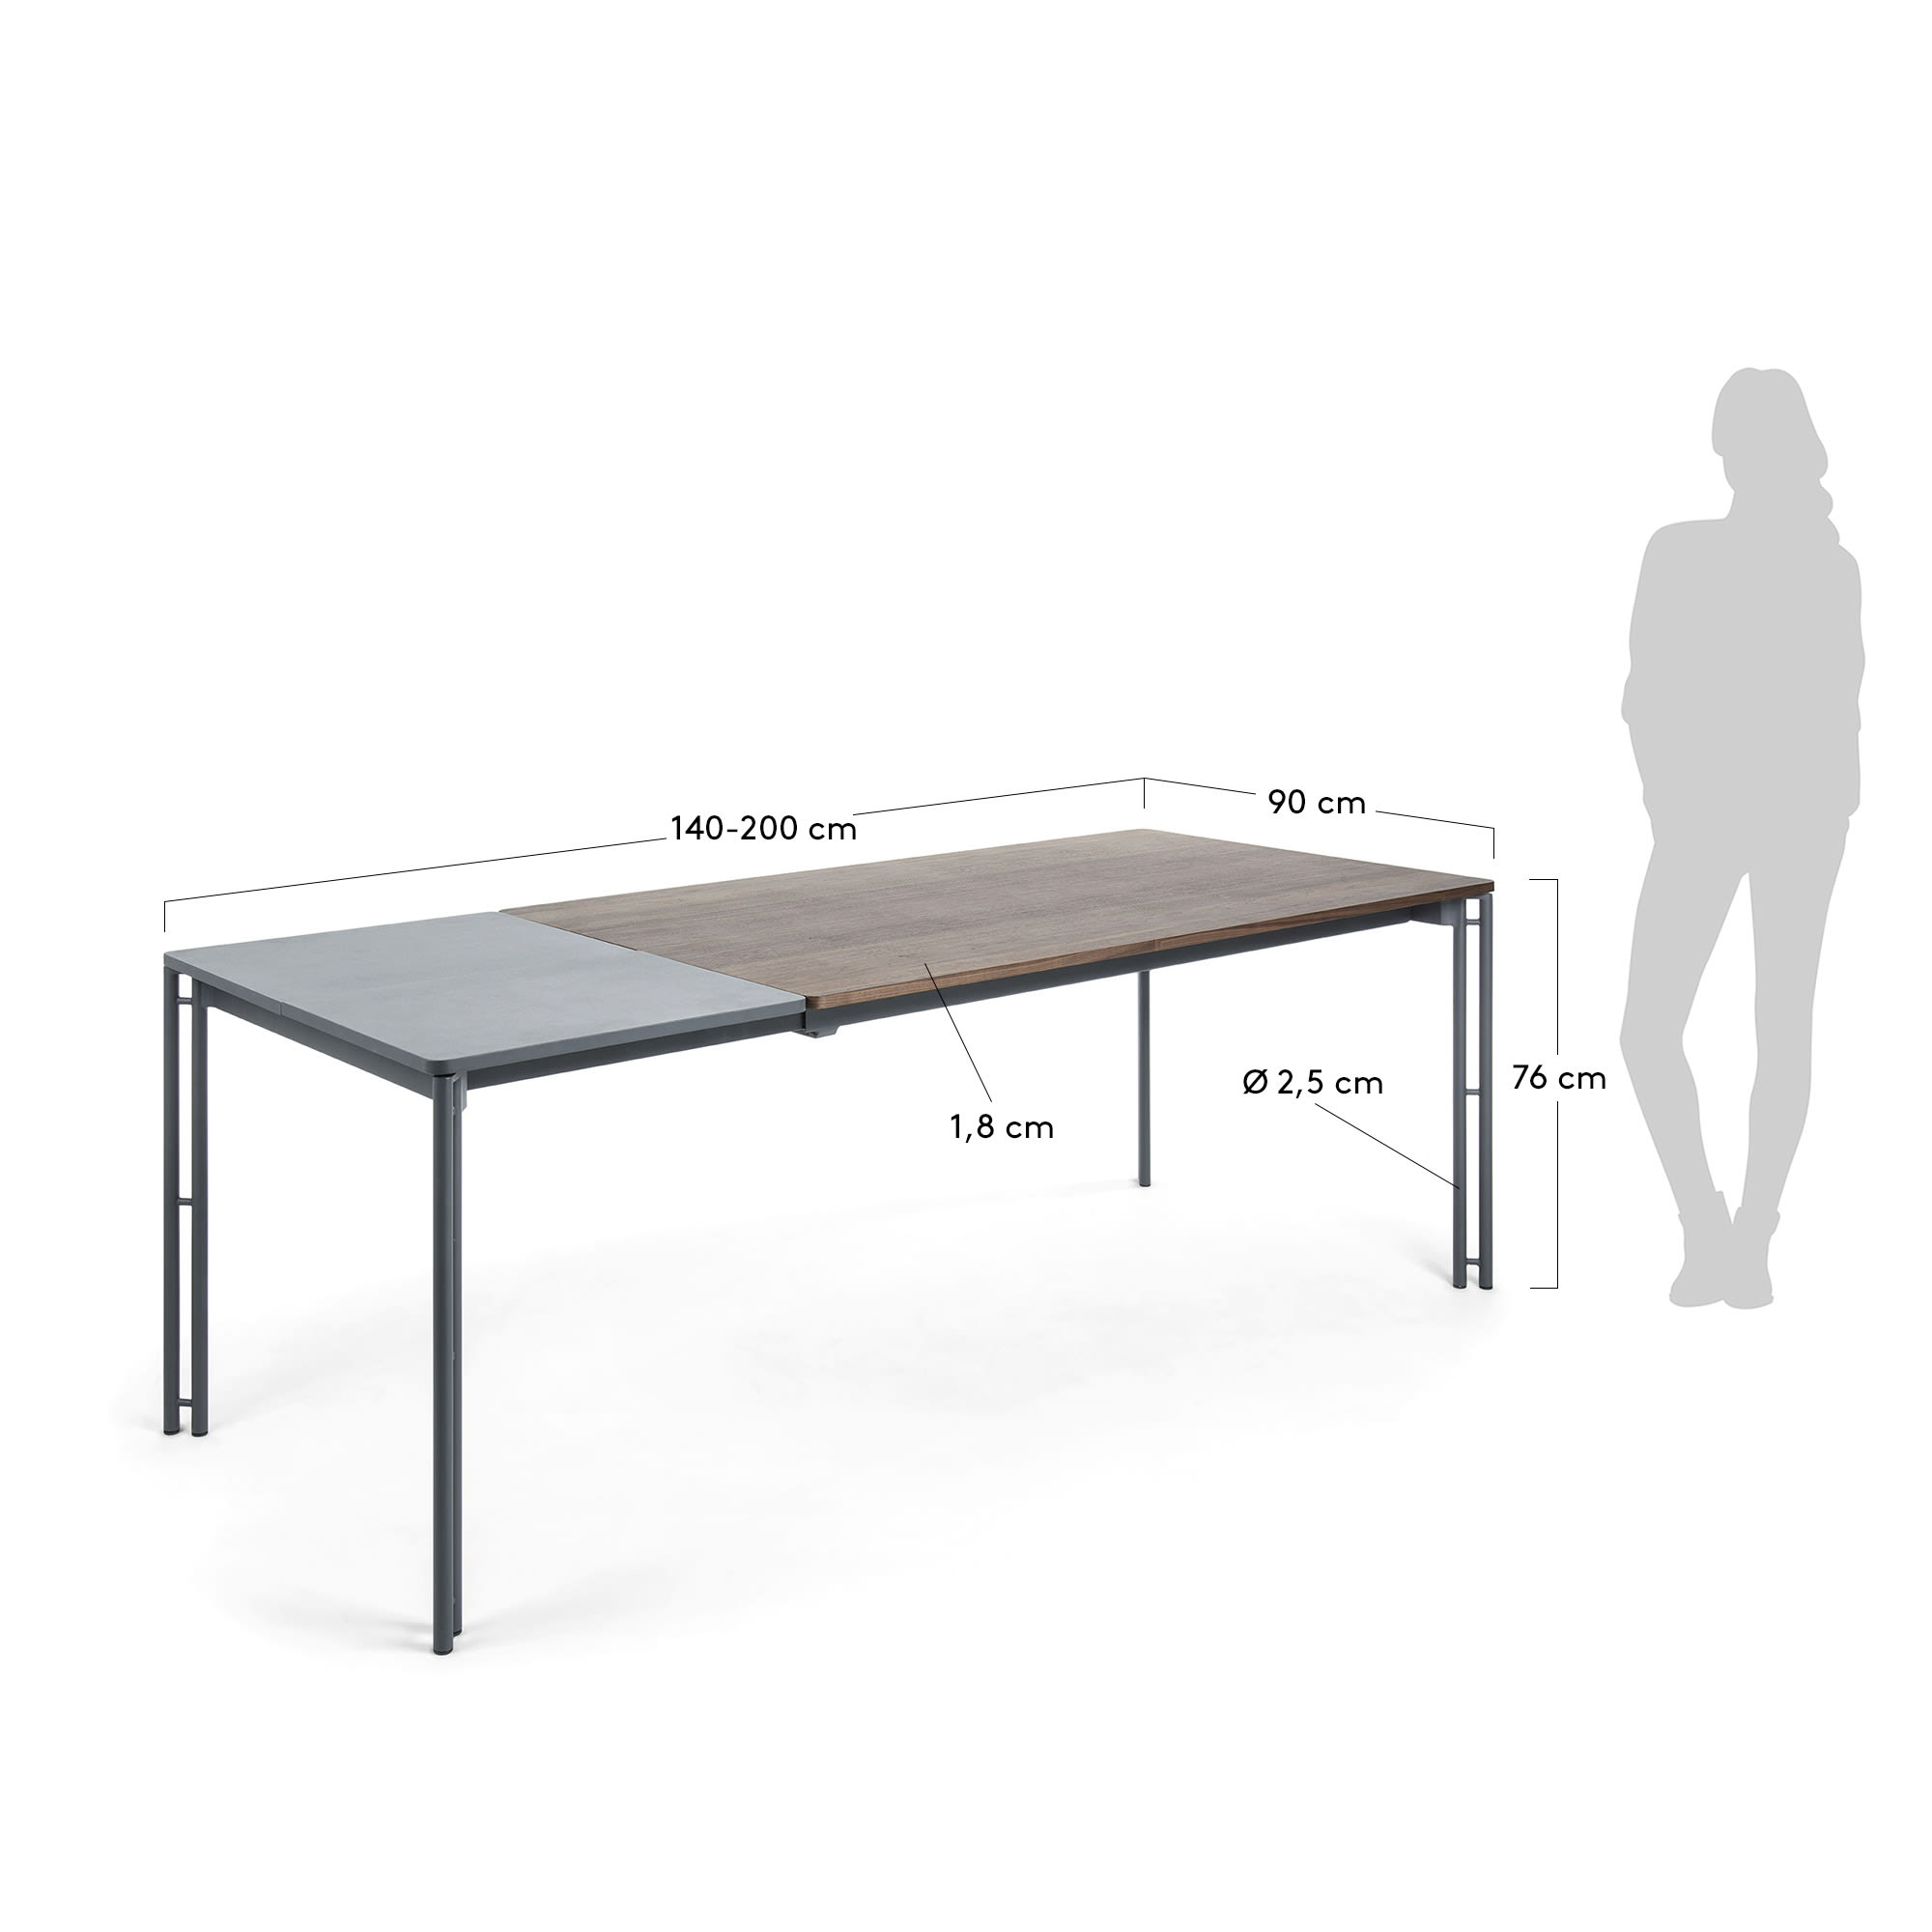 Kesia extendable table 140 (200) x 90 cm1 - sizes